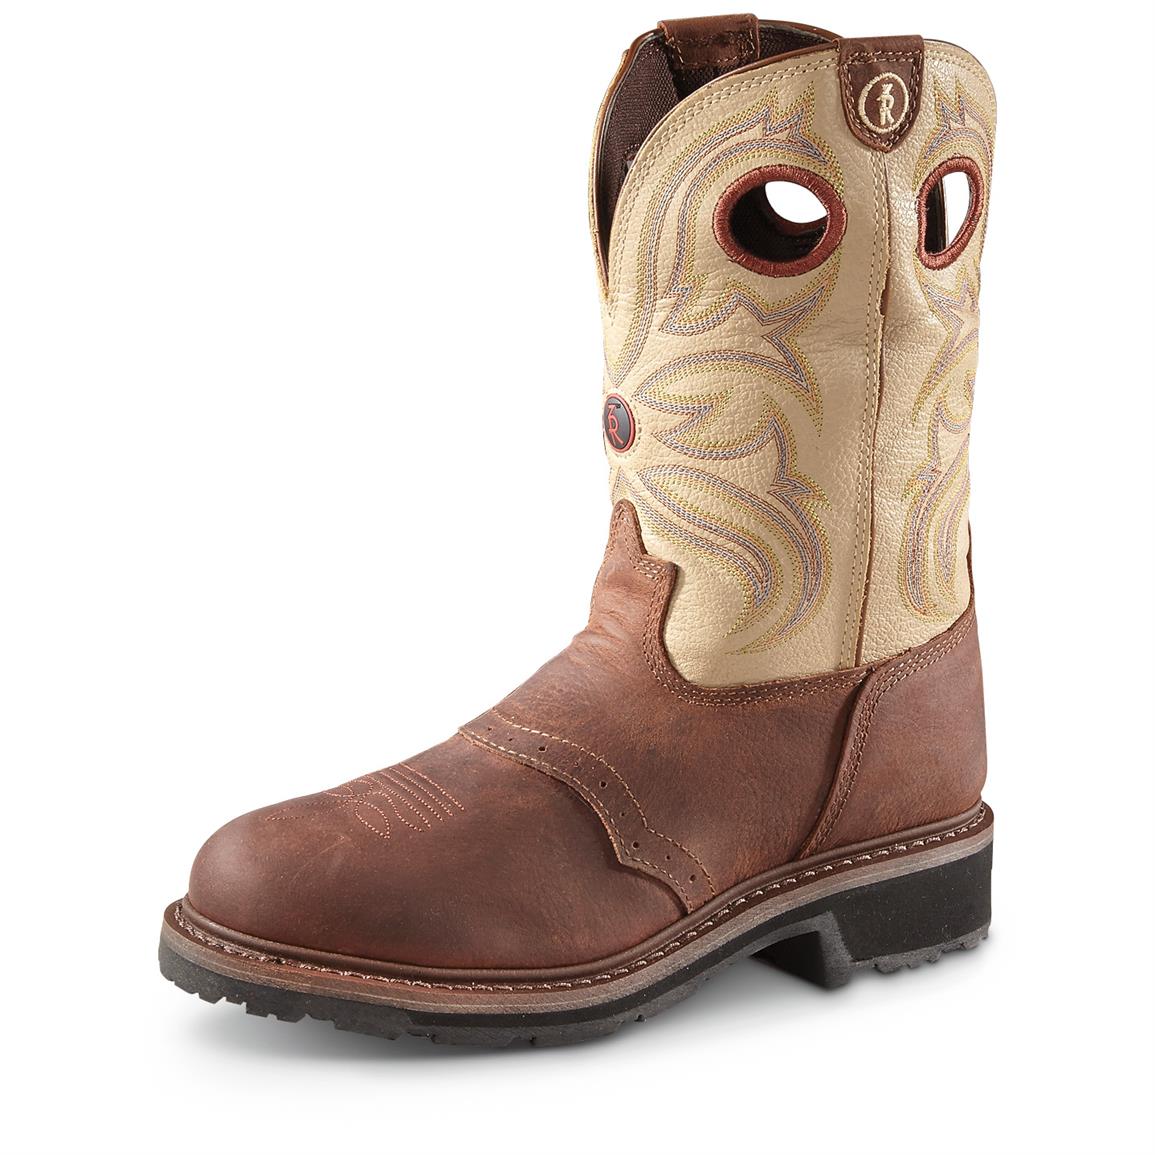 Tony Lama Men's 3R Cowboy Work Boots, Steel Toe, Waterproof, Sienna Grizzly - 655417, Cowboy 